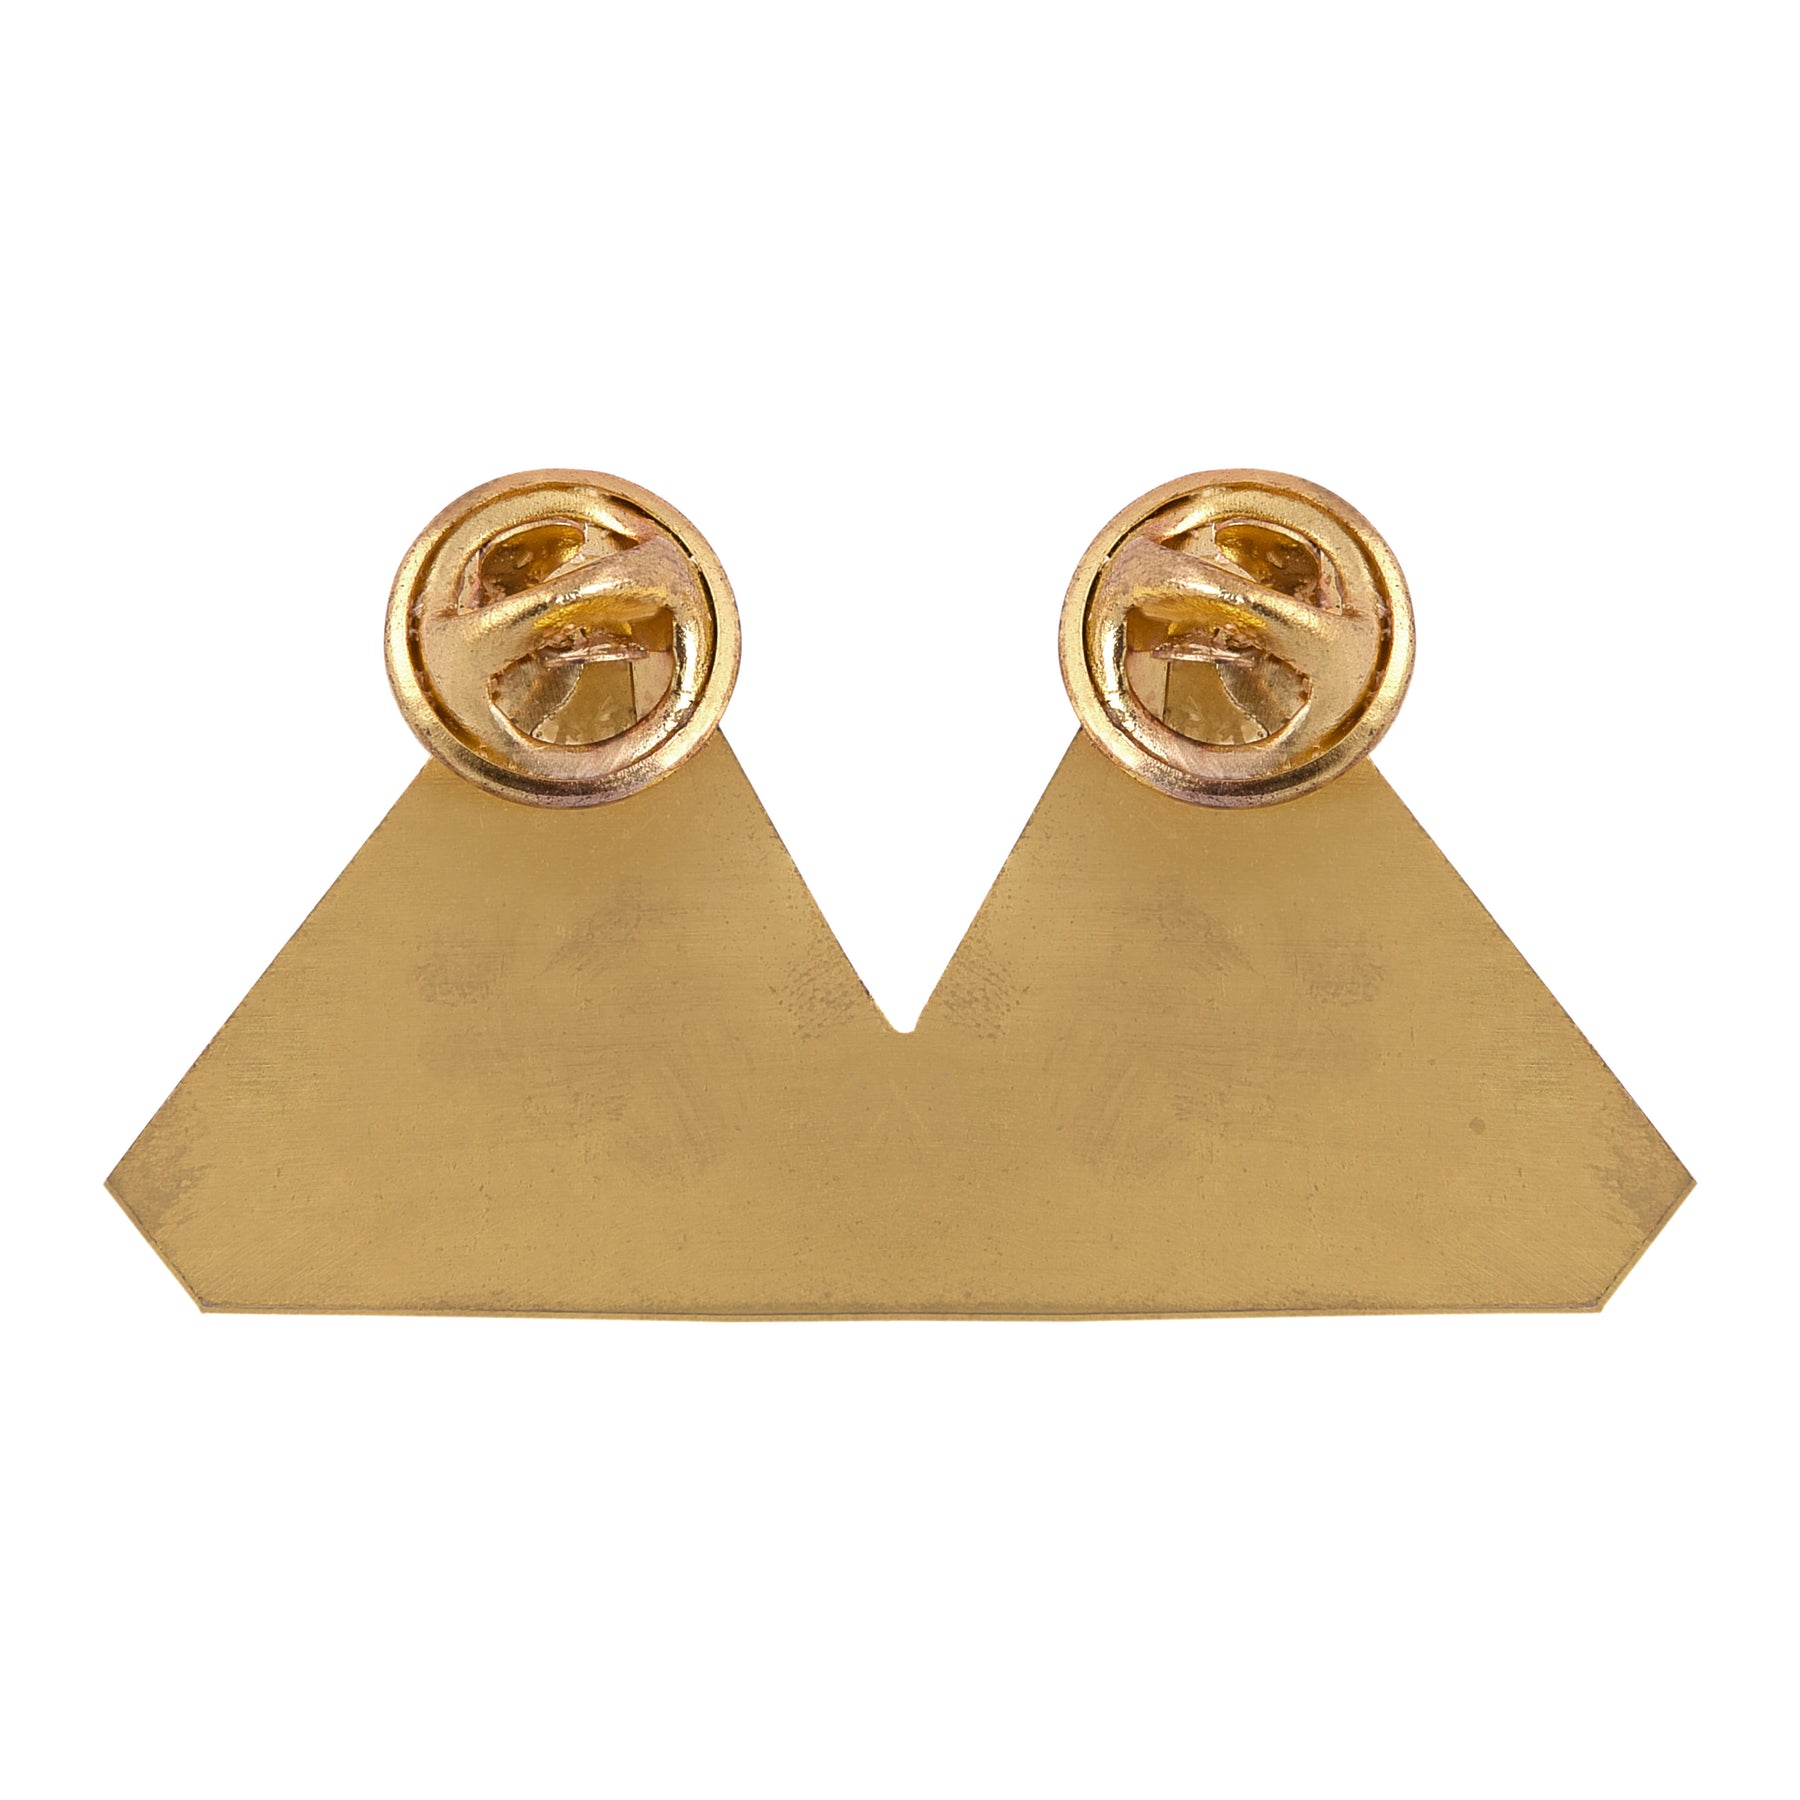 Masonic Lapel Pin - Gold Plated Double Pyramid - Bricks Masons